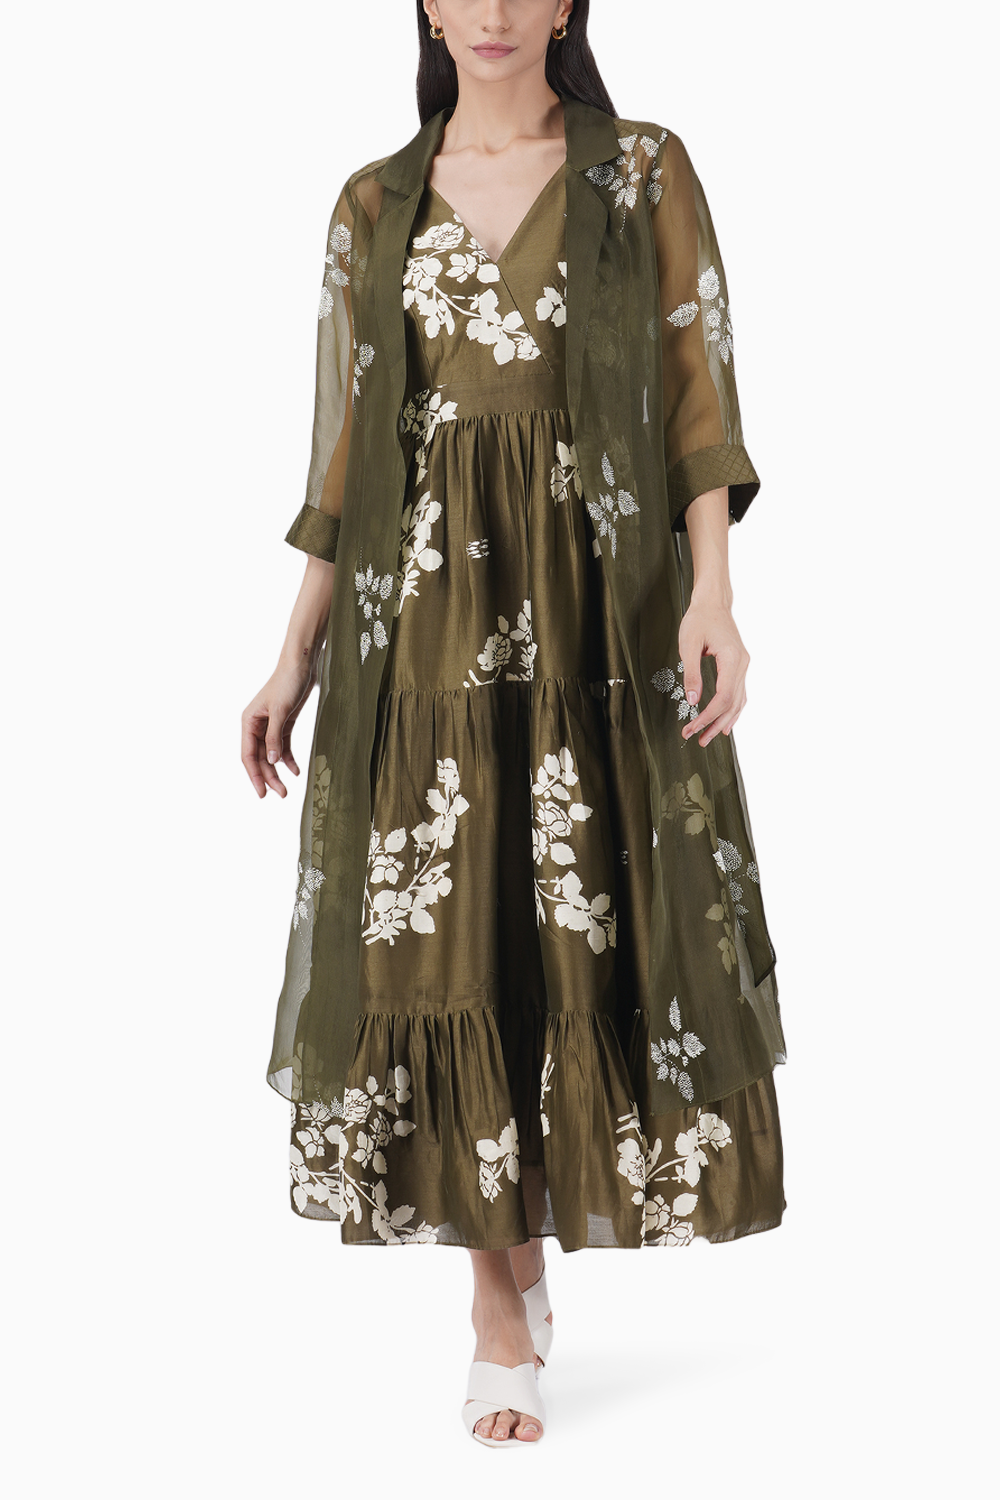 Ivy Petal Printed Olive Dress with Organza Jacket